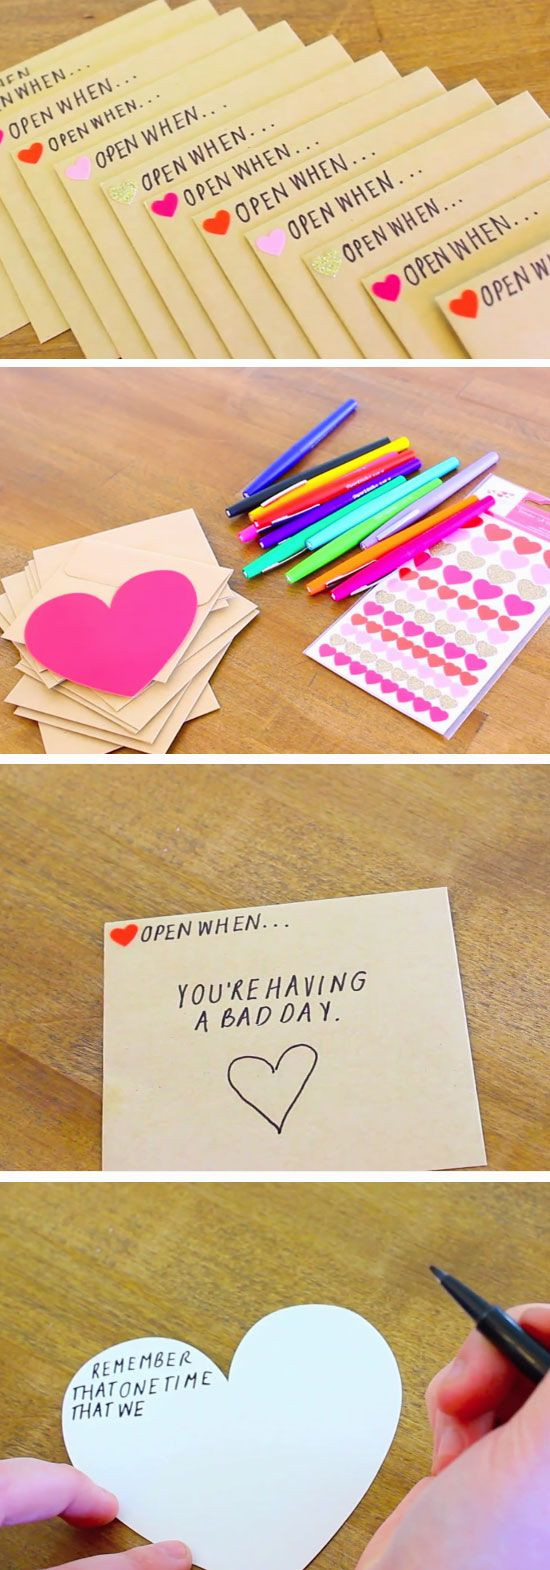 Romantic Homemade Gift Ideas For Boyfriend
 The 25 best Diy ts for boyfriend ideas on Pinterest